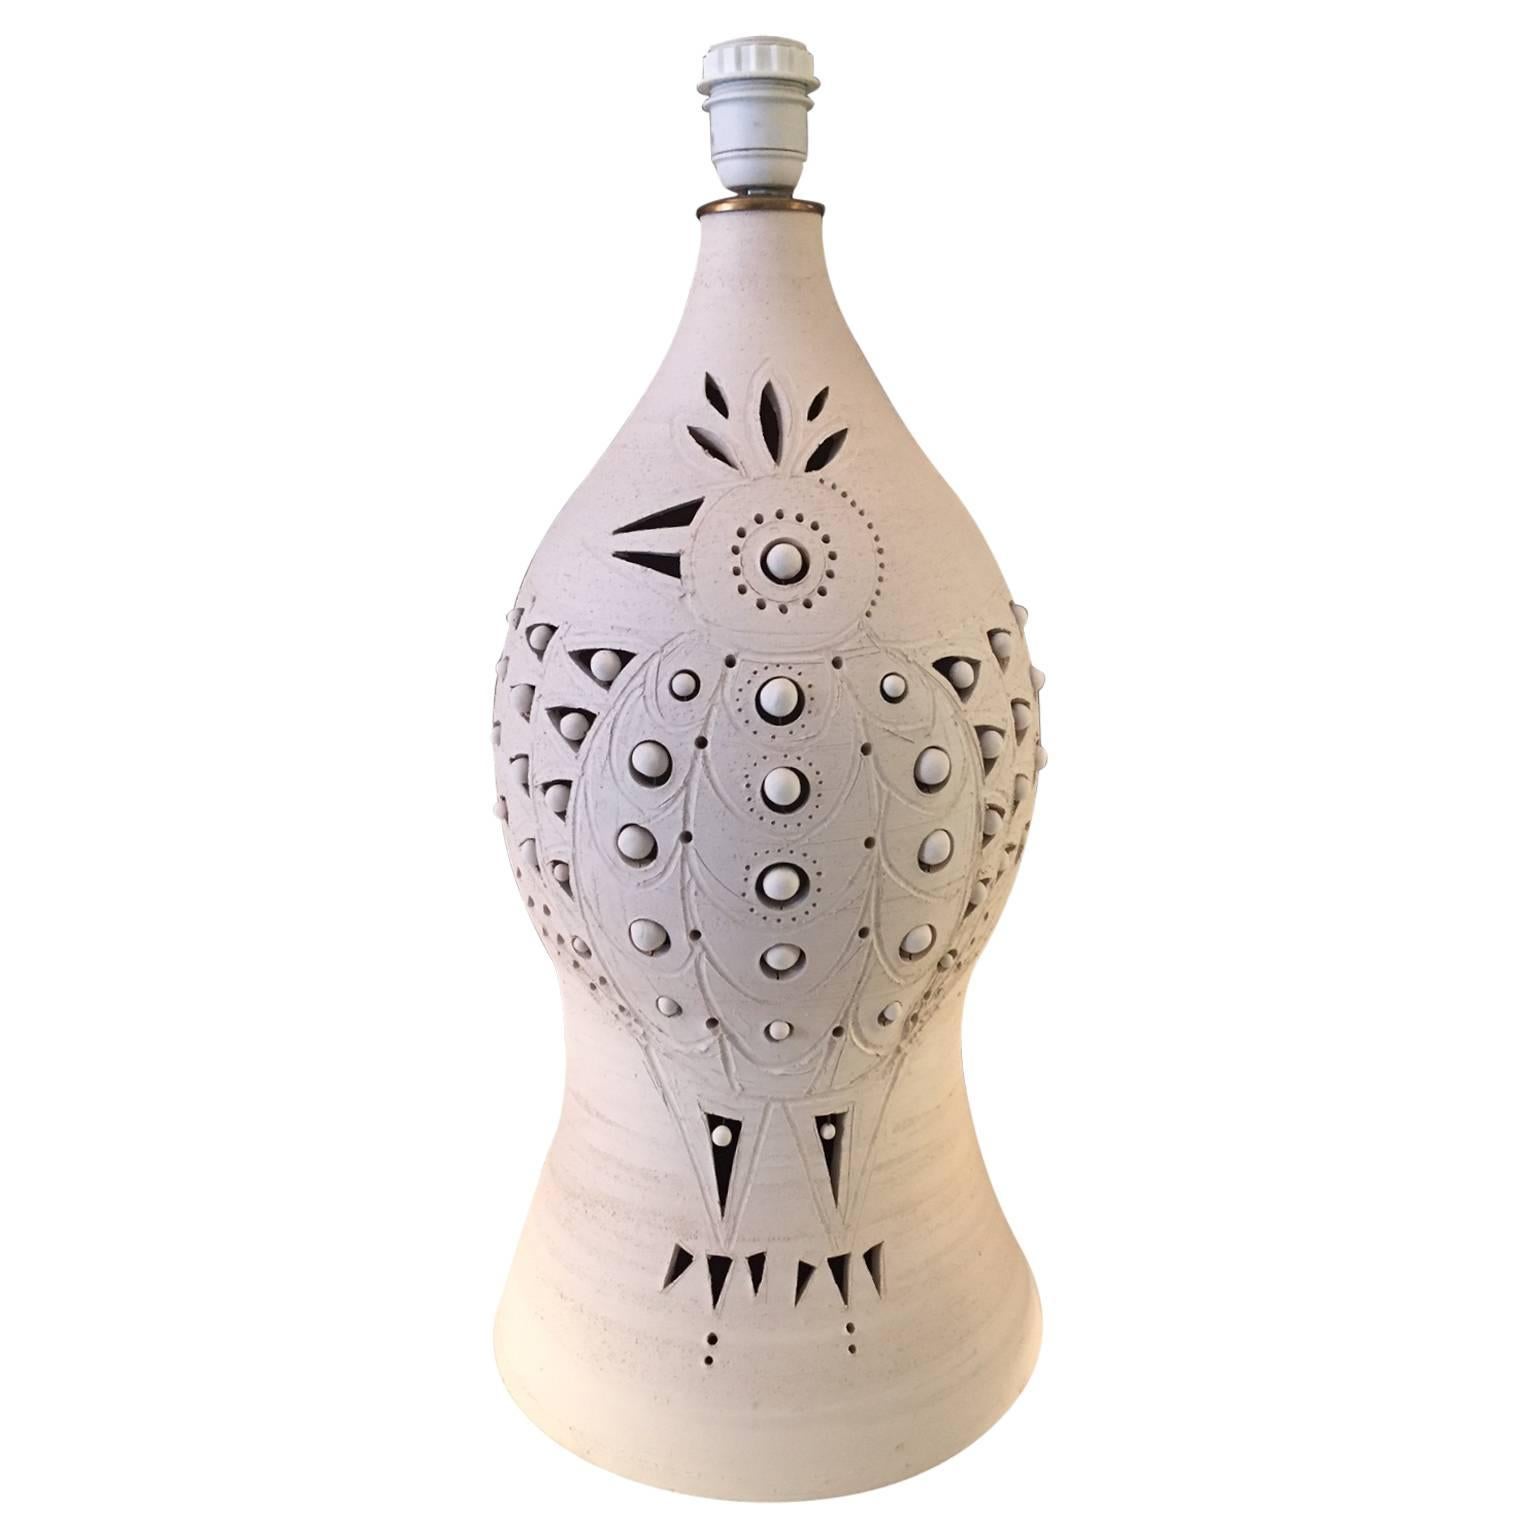 Georges Pelletier, "Owl" Lamp, Unglazed Ceramic, Signed, circa 1970, France